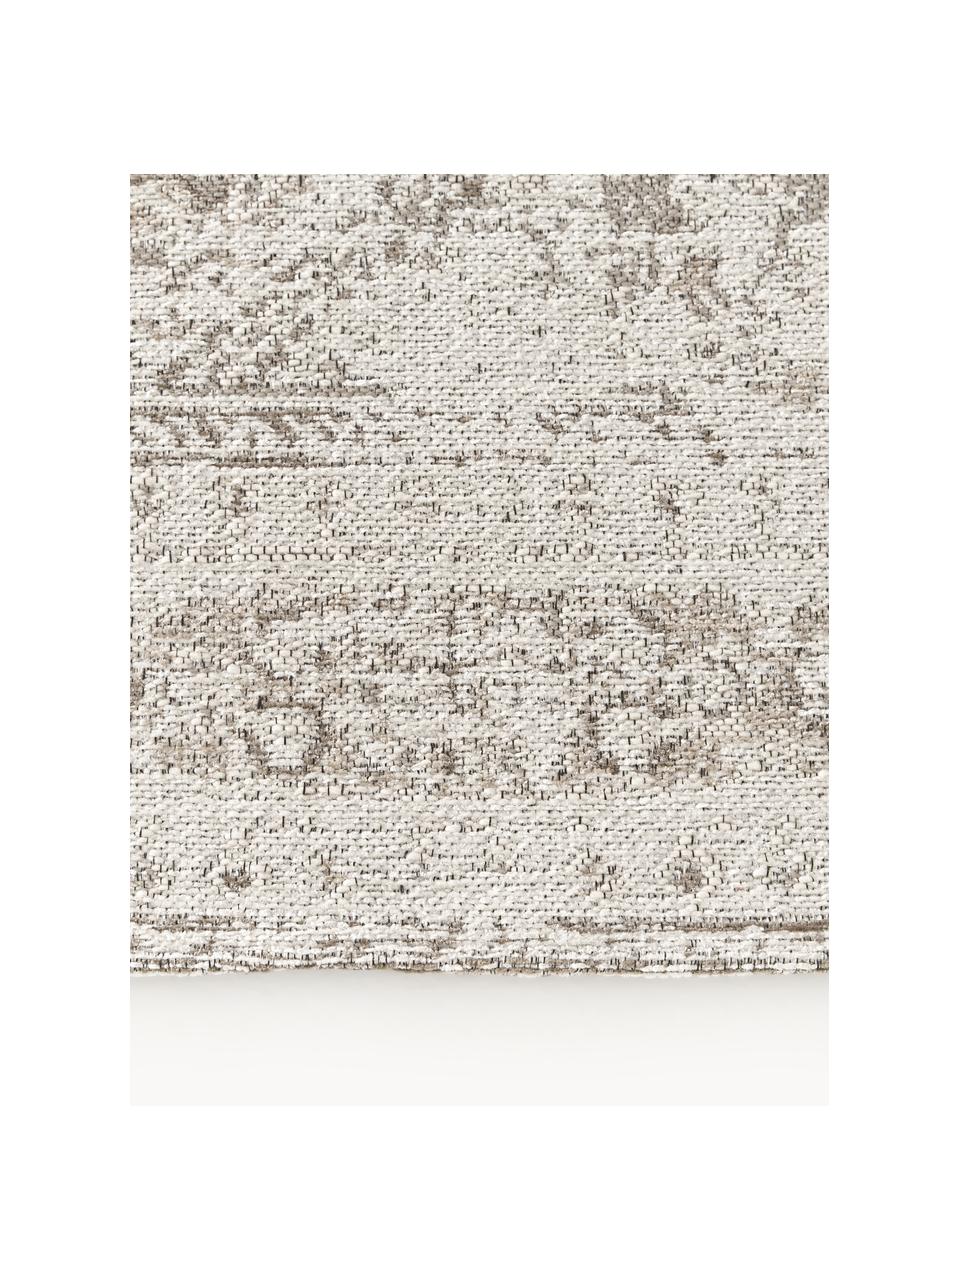 Žinylkový koberec Cora, 66 % polyester, 34 % vlna (RWS certifikace), Odstíny béžové, Š 120 cm, D 180 cm (velikost S)